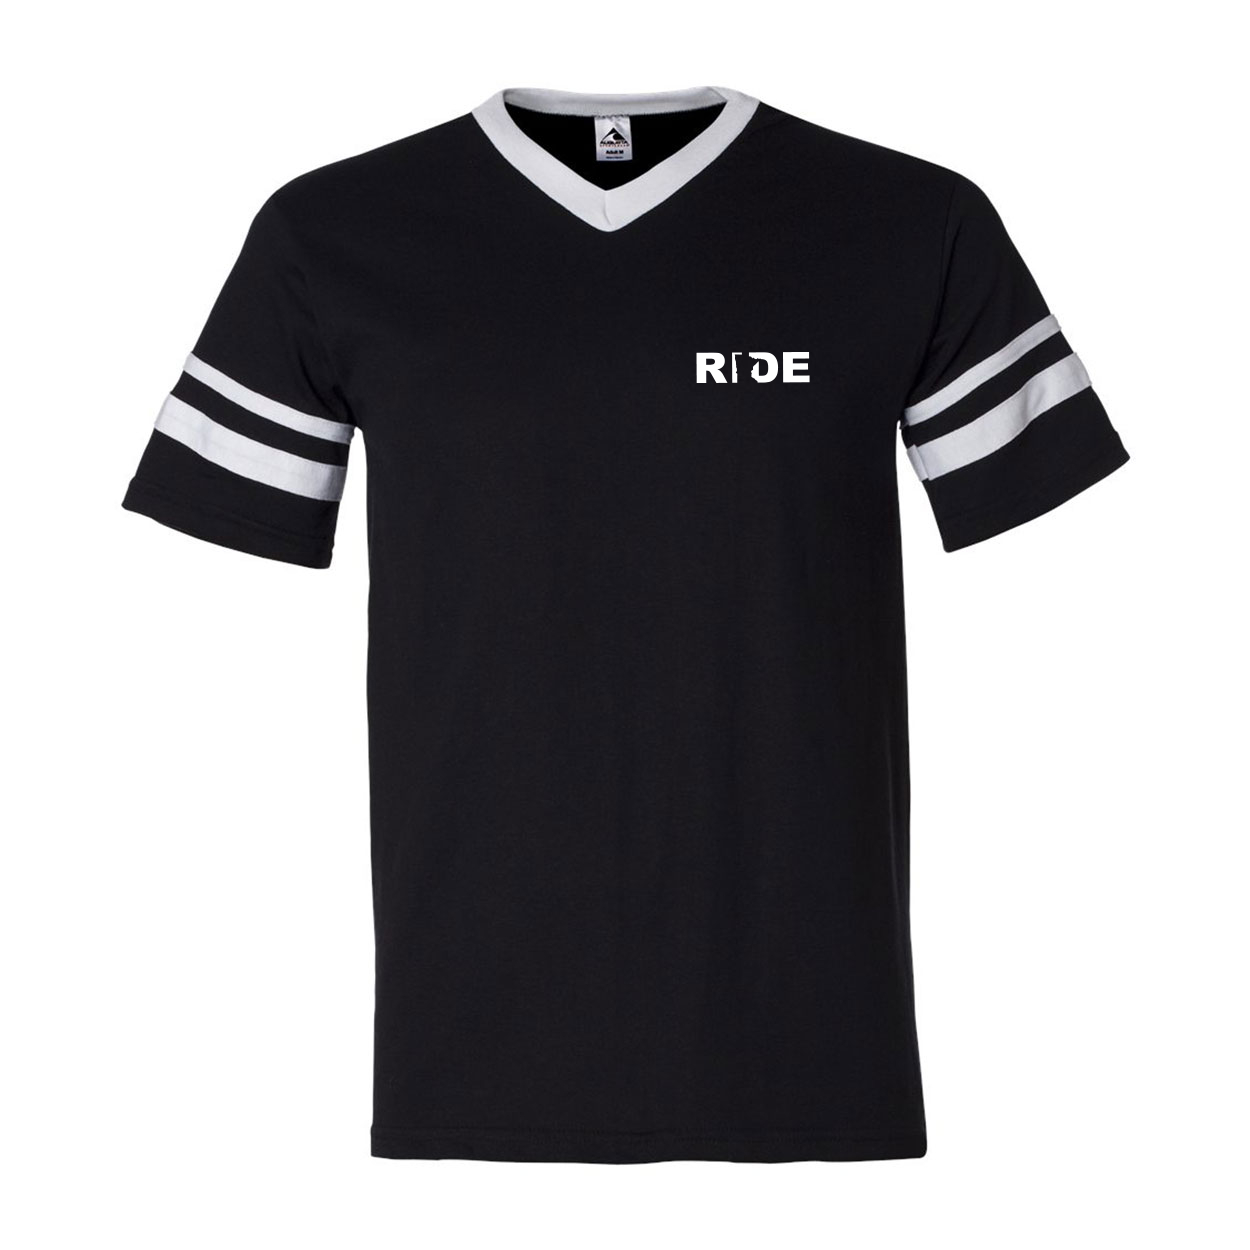 Ride Minnesota Night Out Premium Striped Jersey T-Shirt Black/White